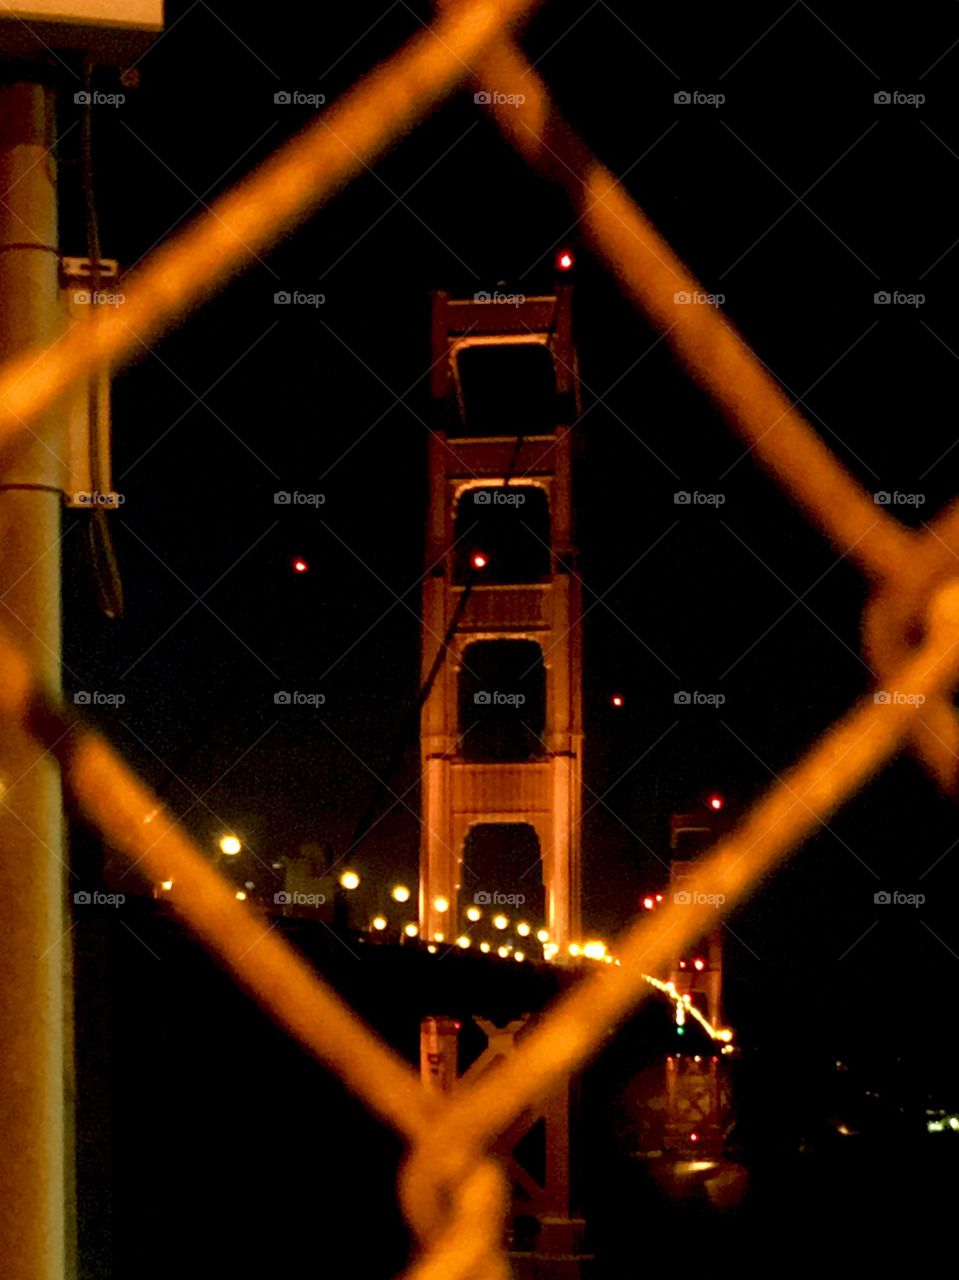 Golden Gate Bridge at night. Seen through a chain link fence. 